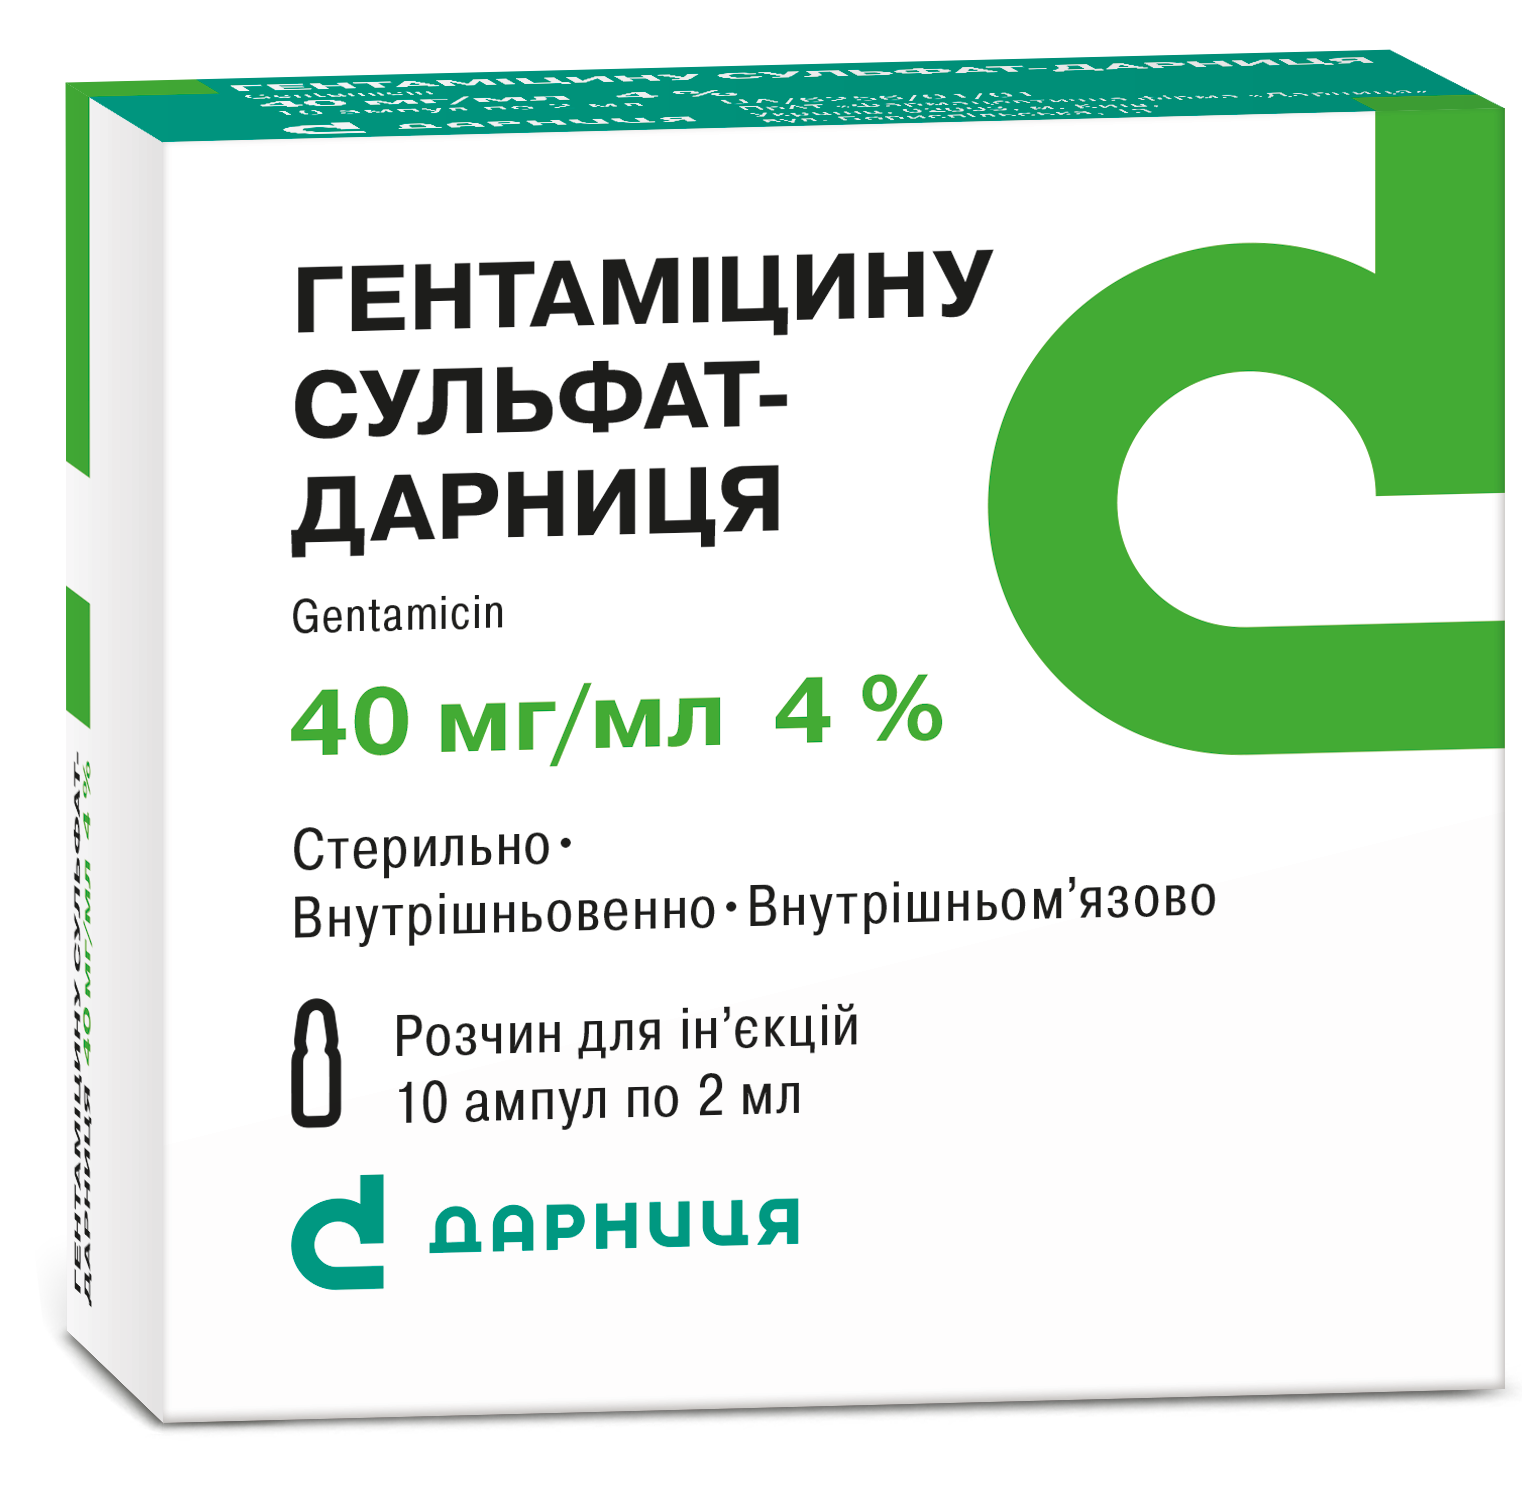 Gentamicin sulfate-Darnitsa